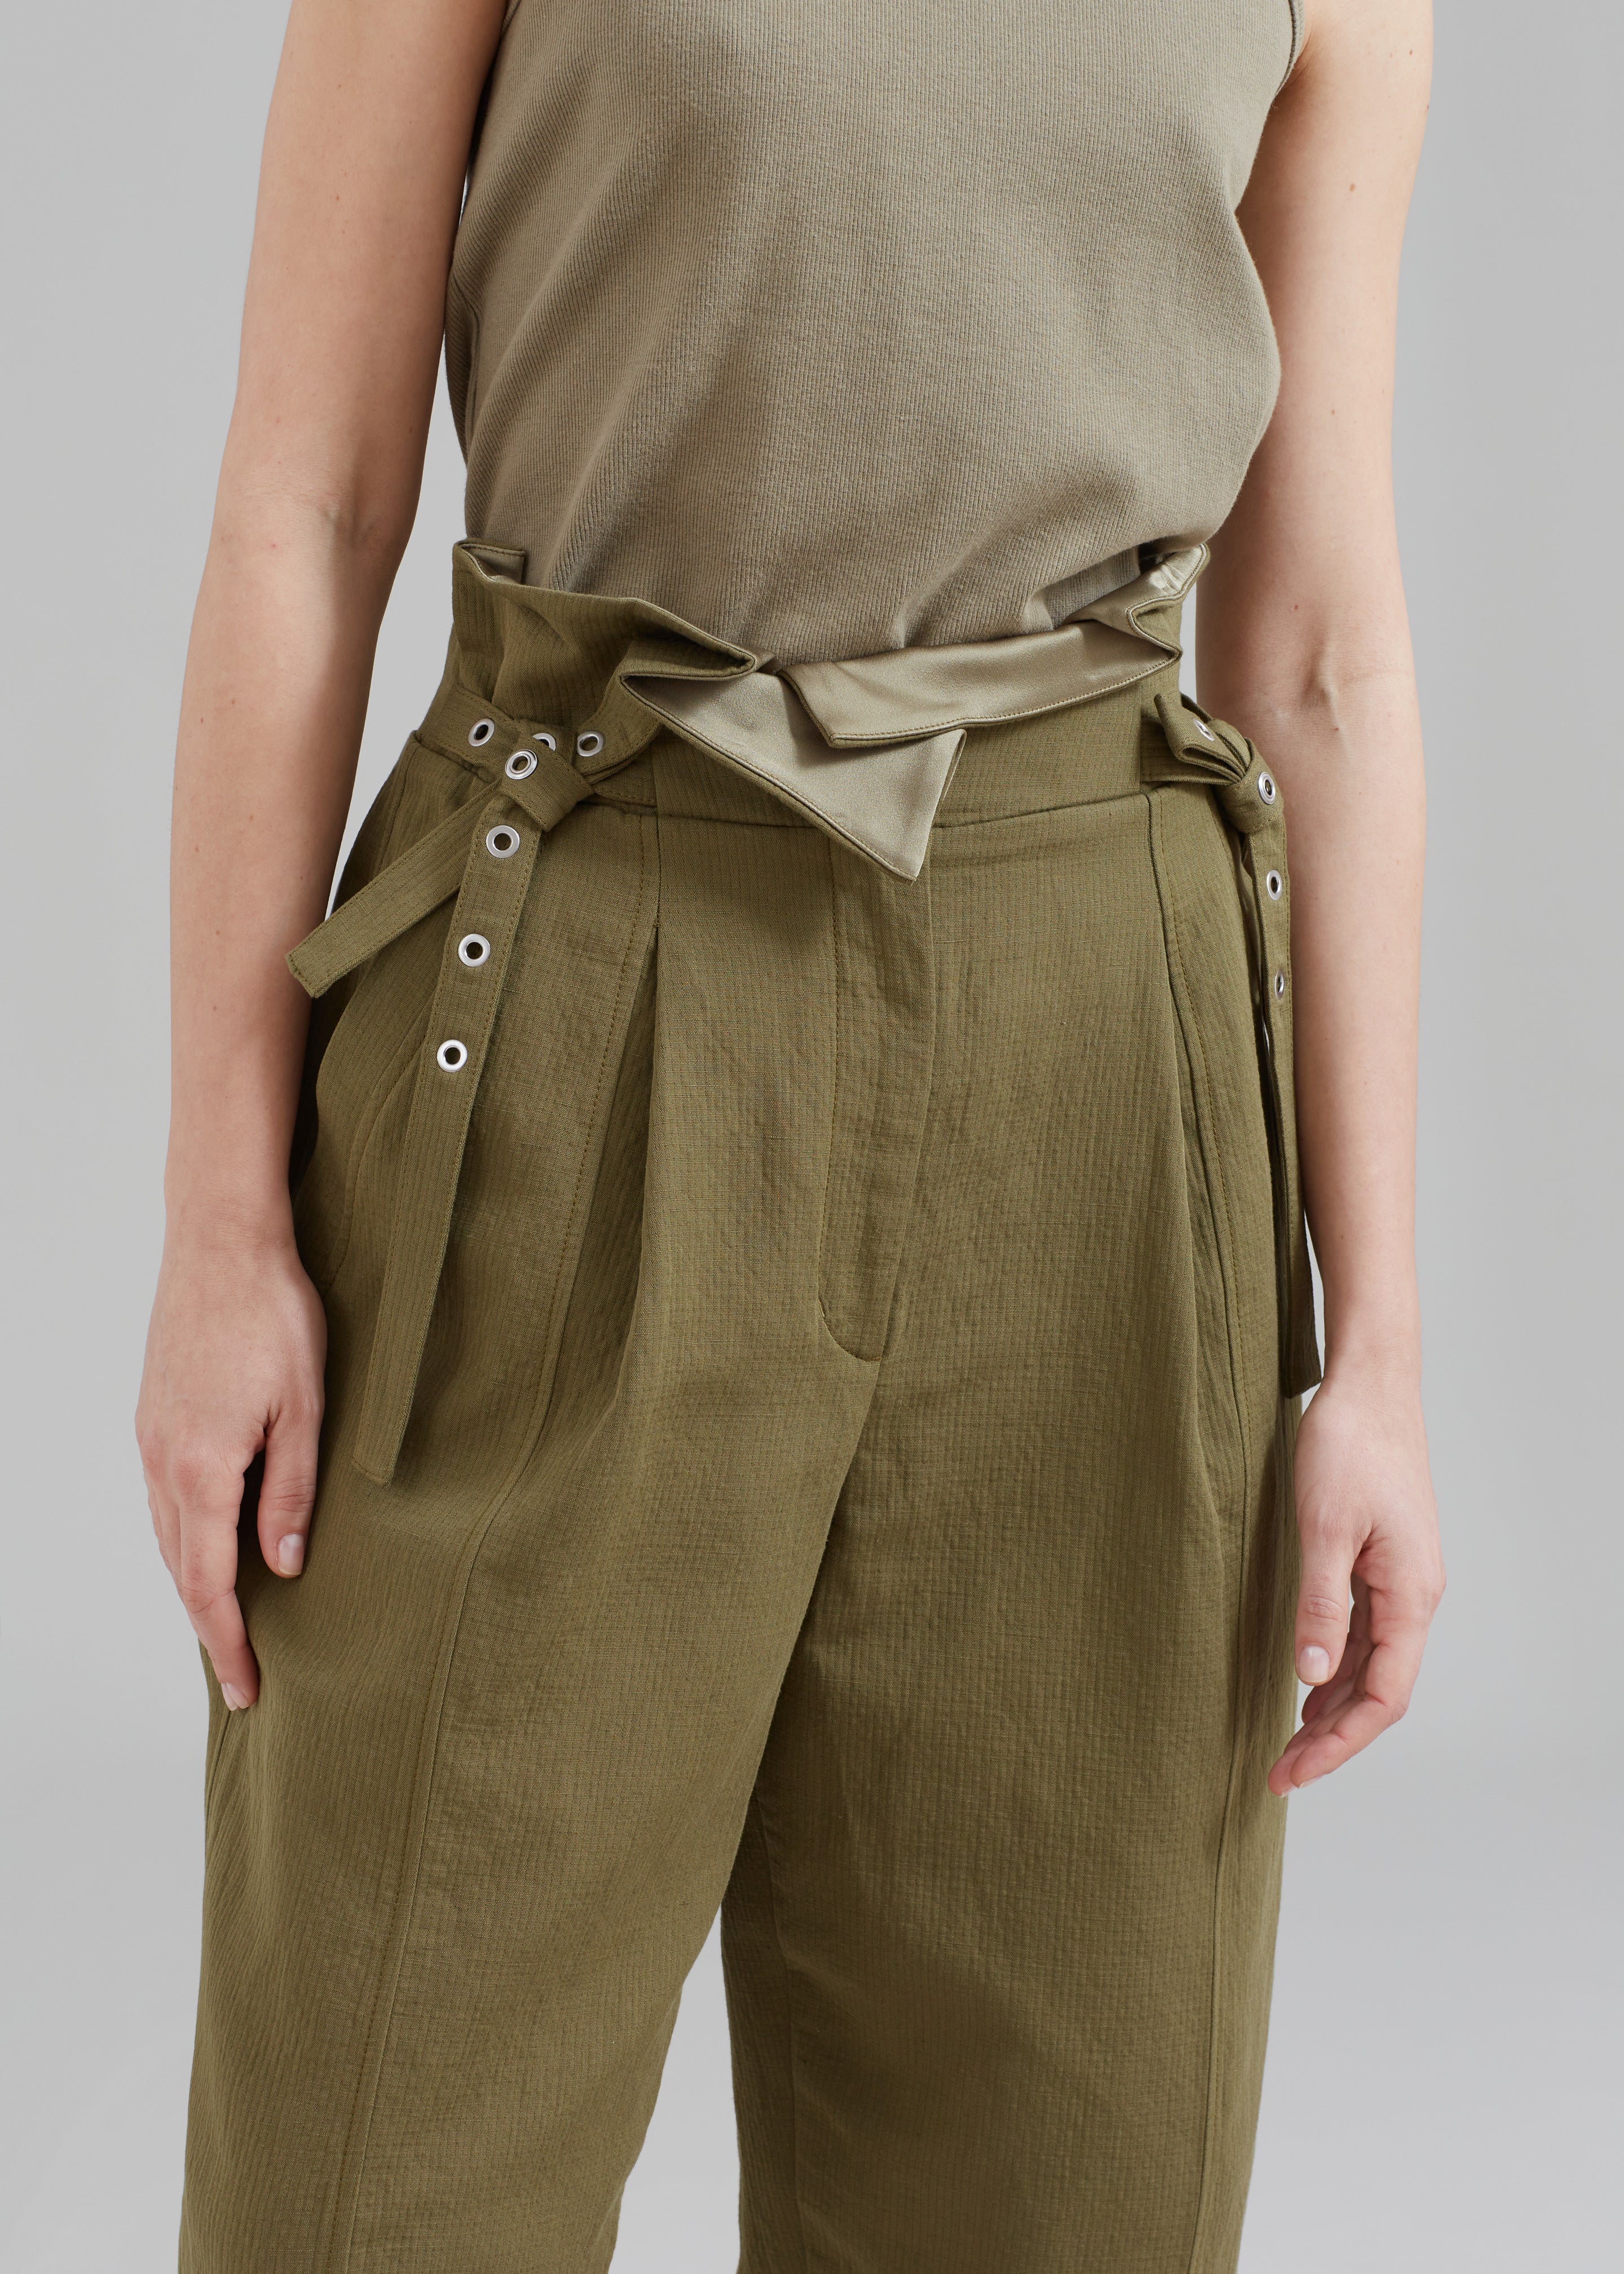 Paper bag trousers - Burgundy - Ladies | H&M IN